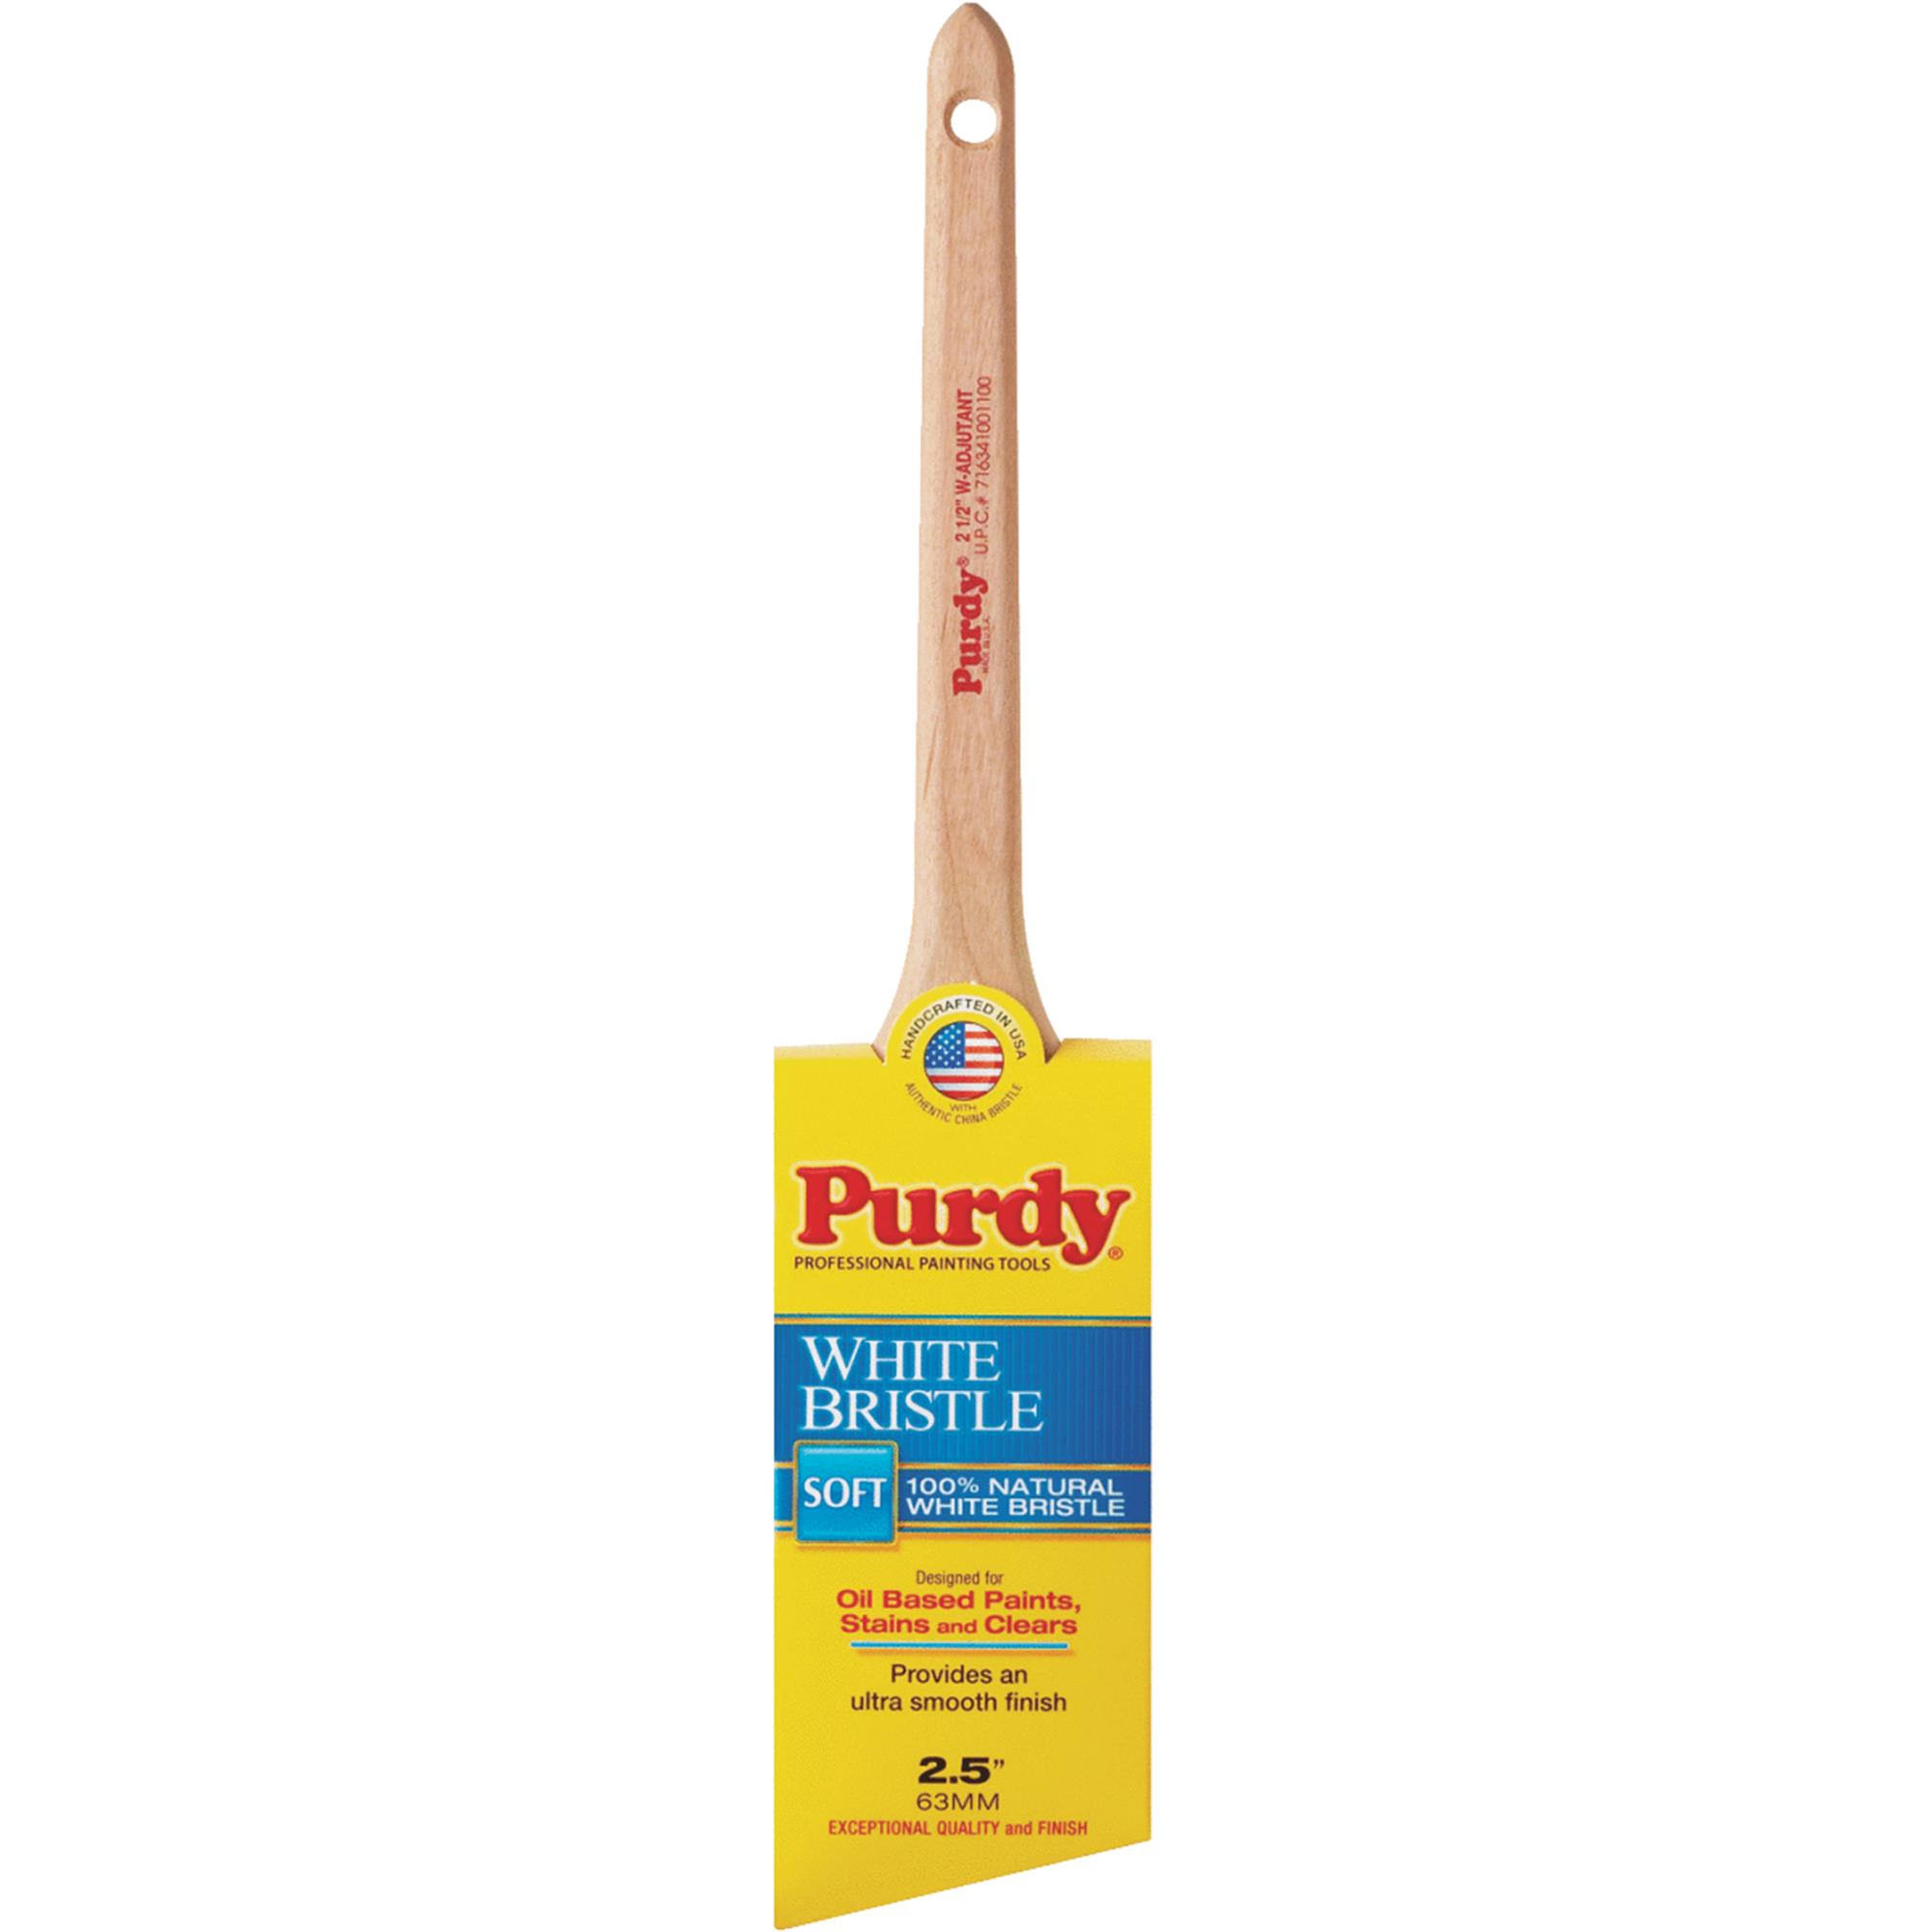 Purdy White Bristle Brush - 2.5"